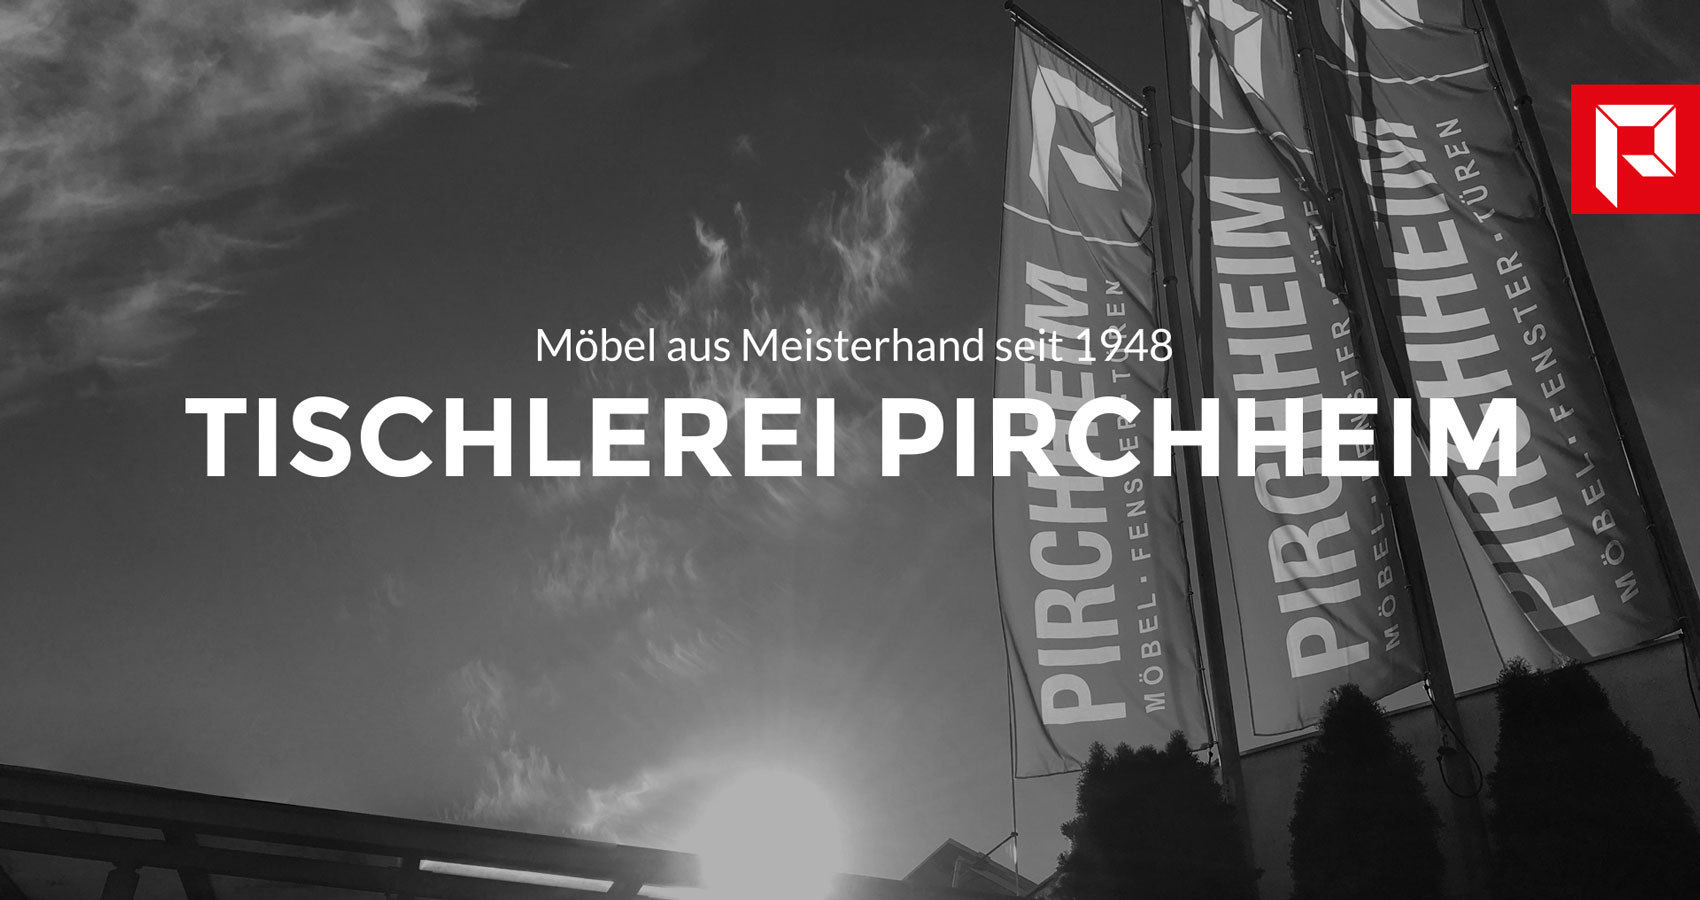 (c) Pirchheim.at